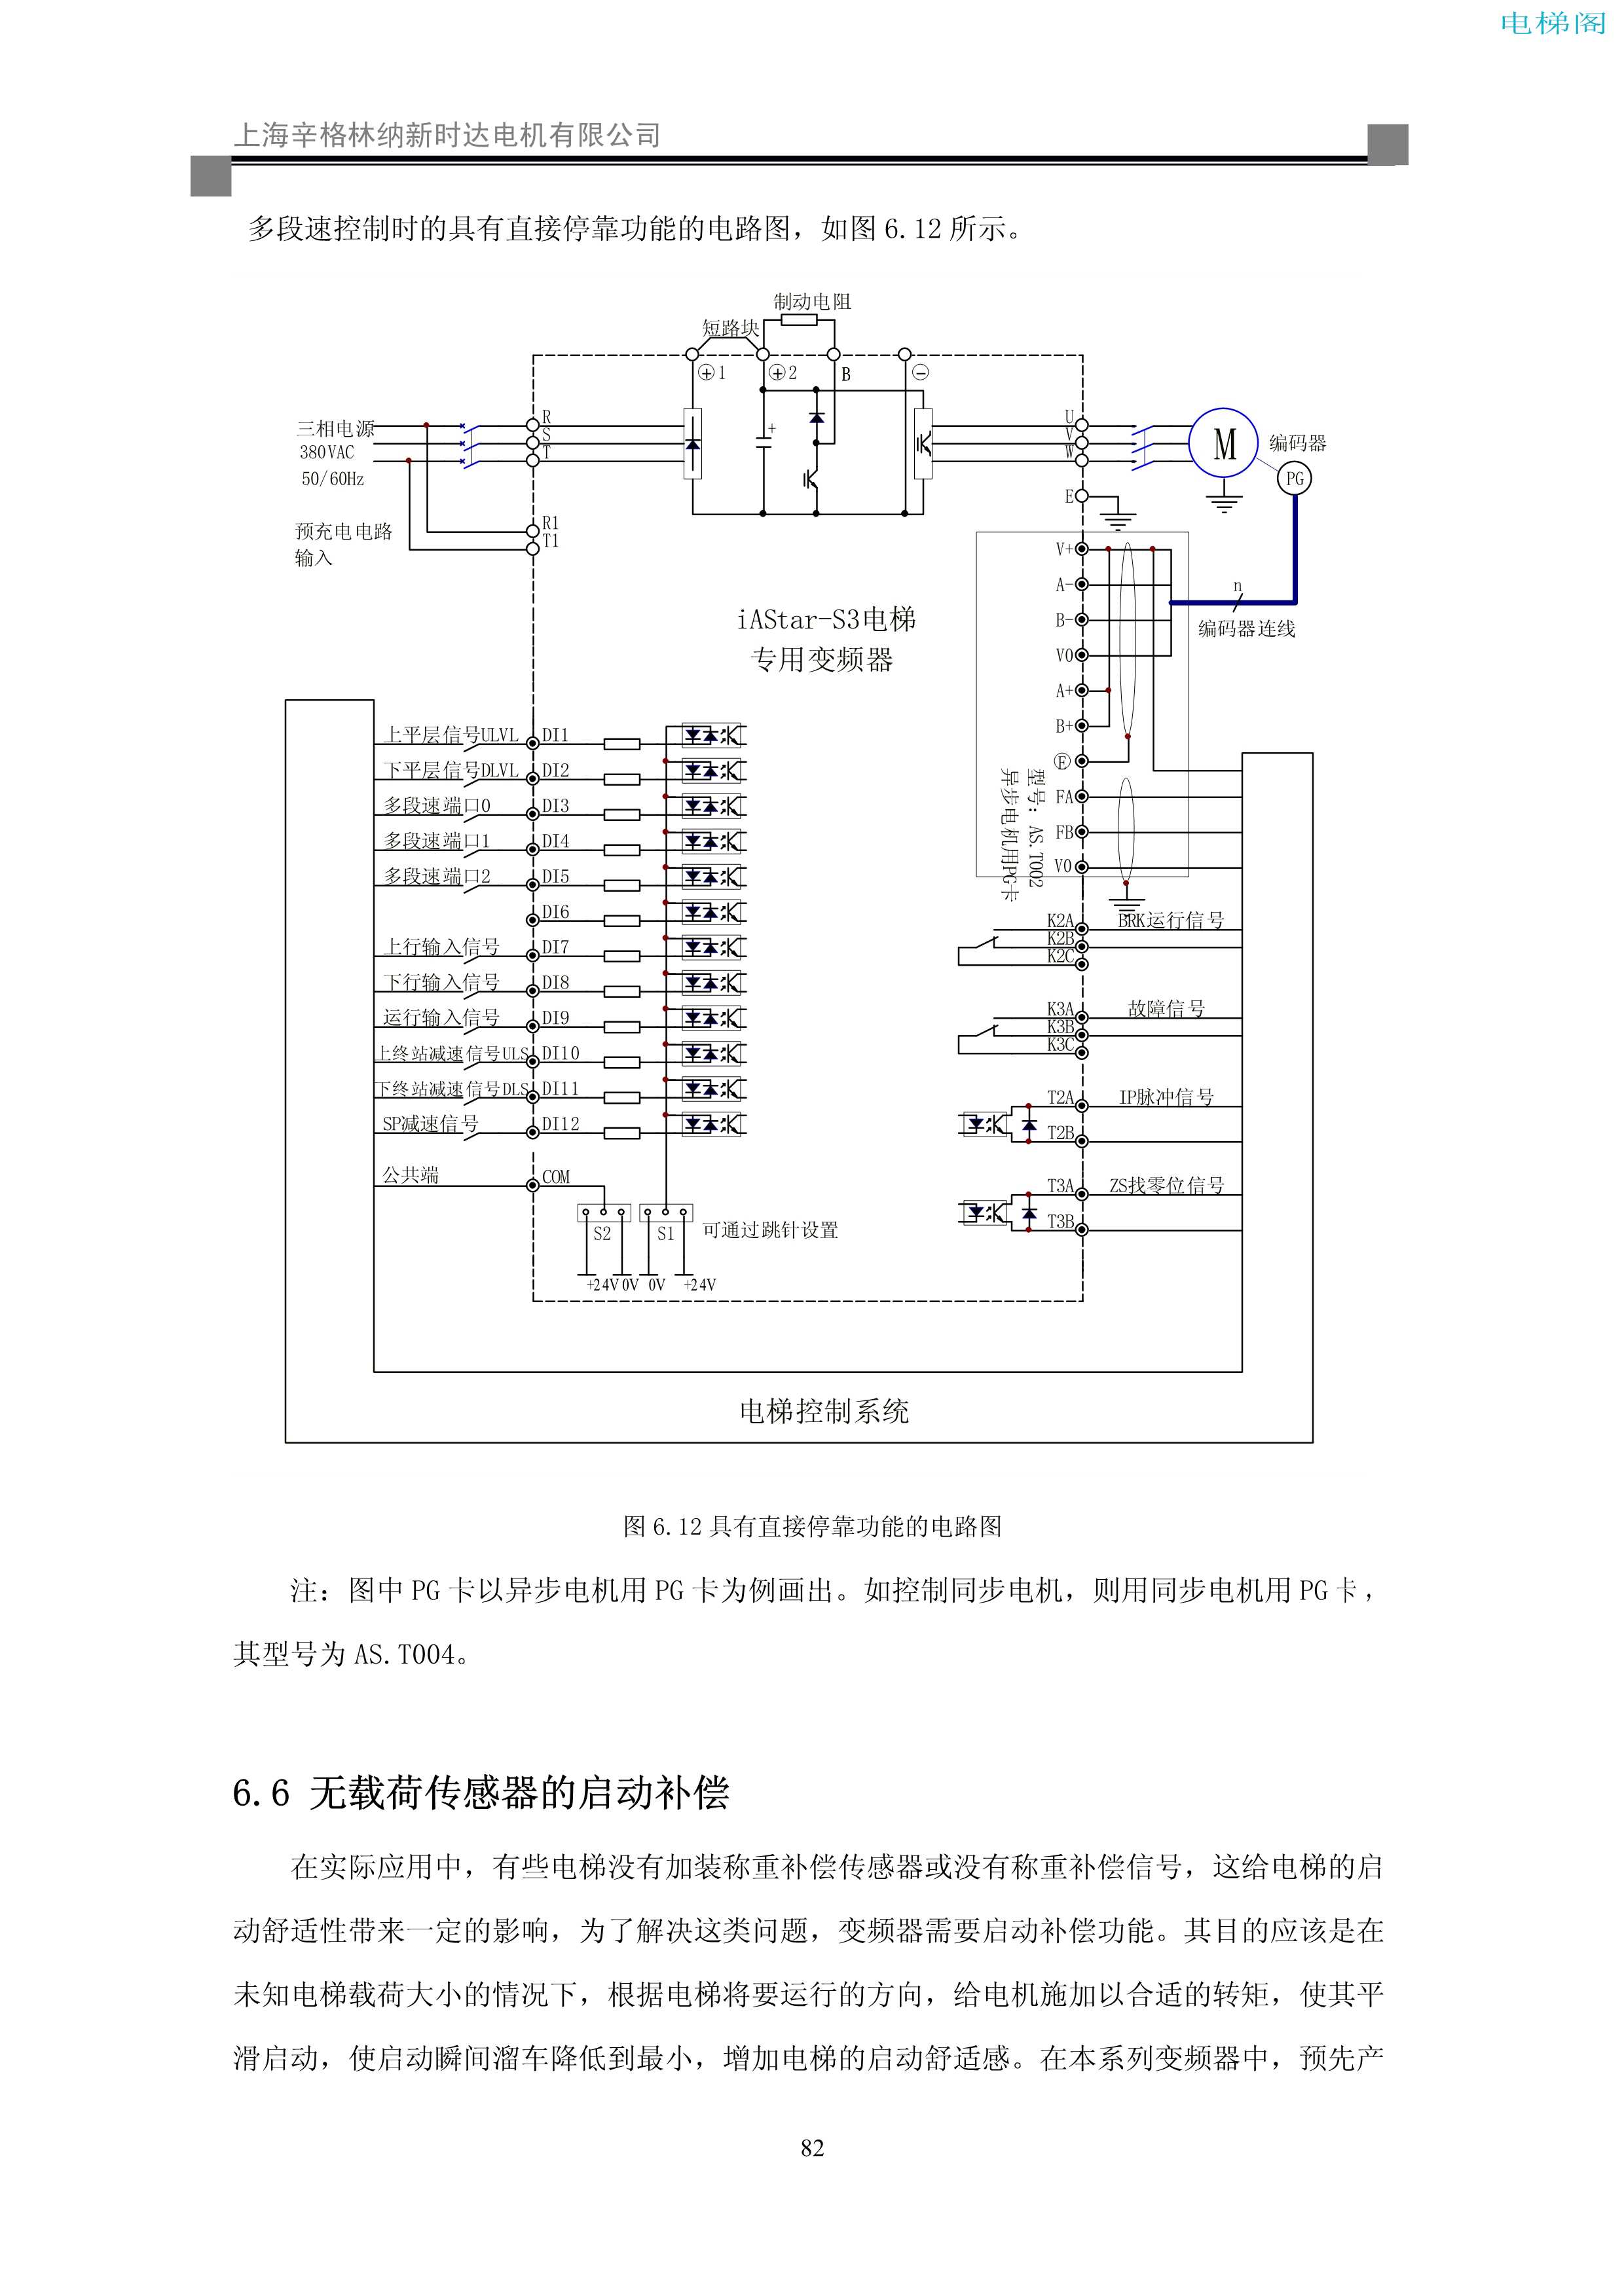 iAStar-S3系列电梯专用变频器使用说明书-9(V2[1].03)_90.jpg